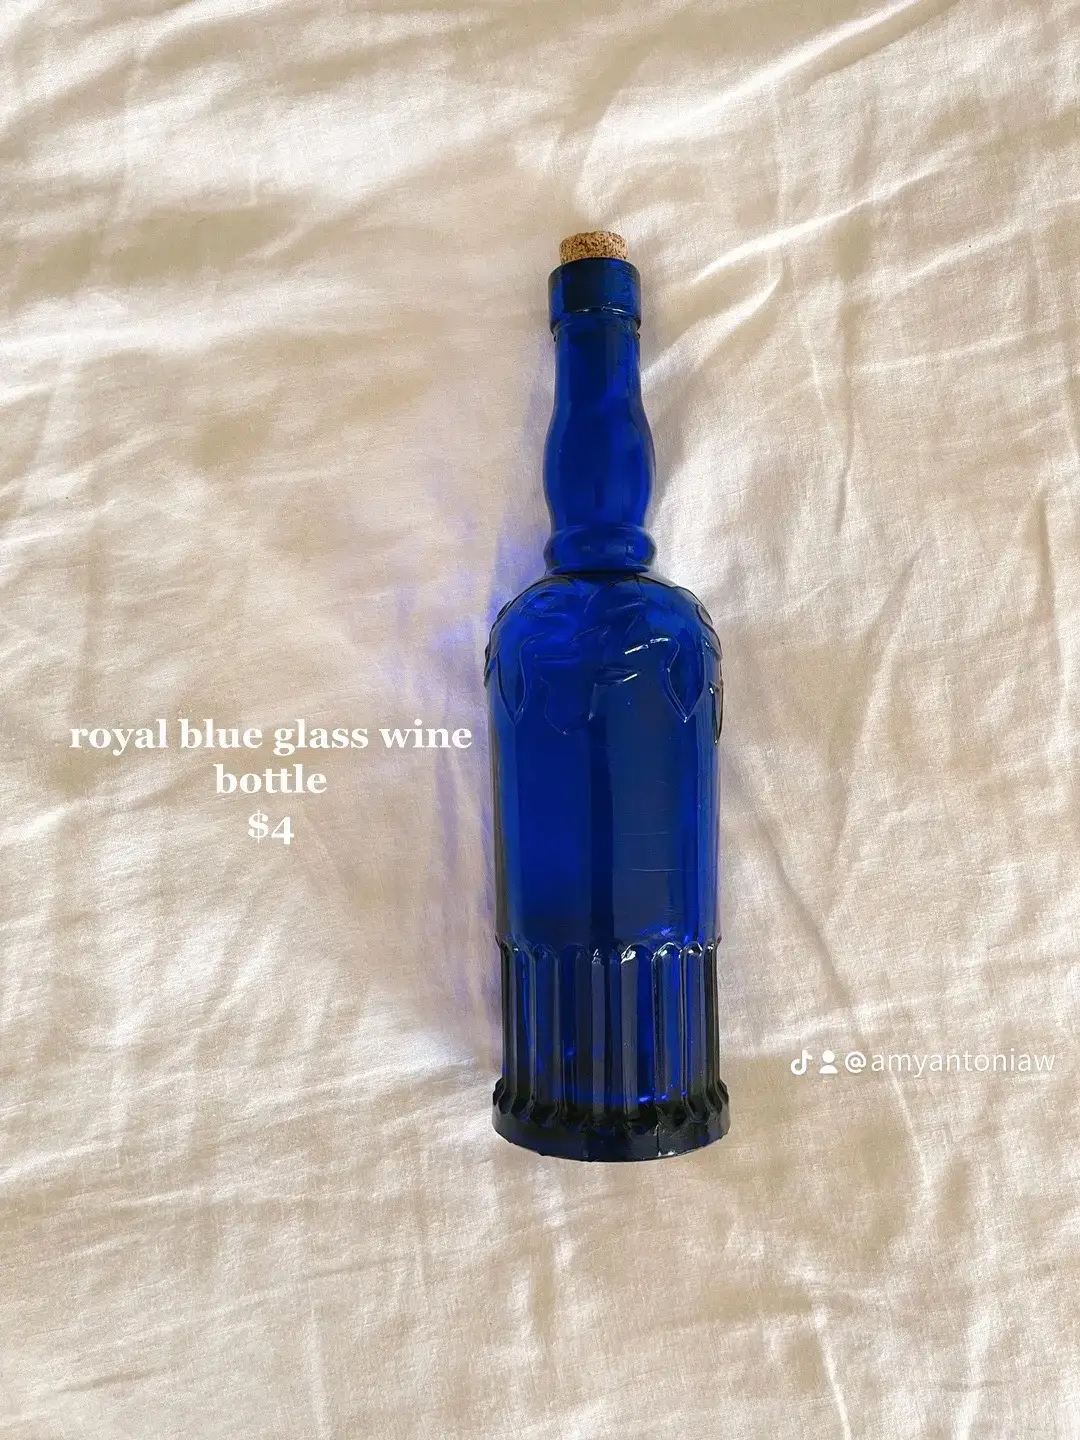  A bottle of royal blue glass wine.